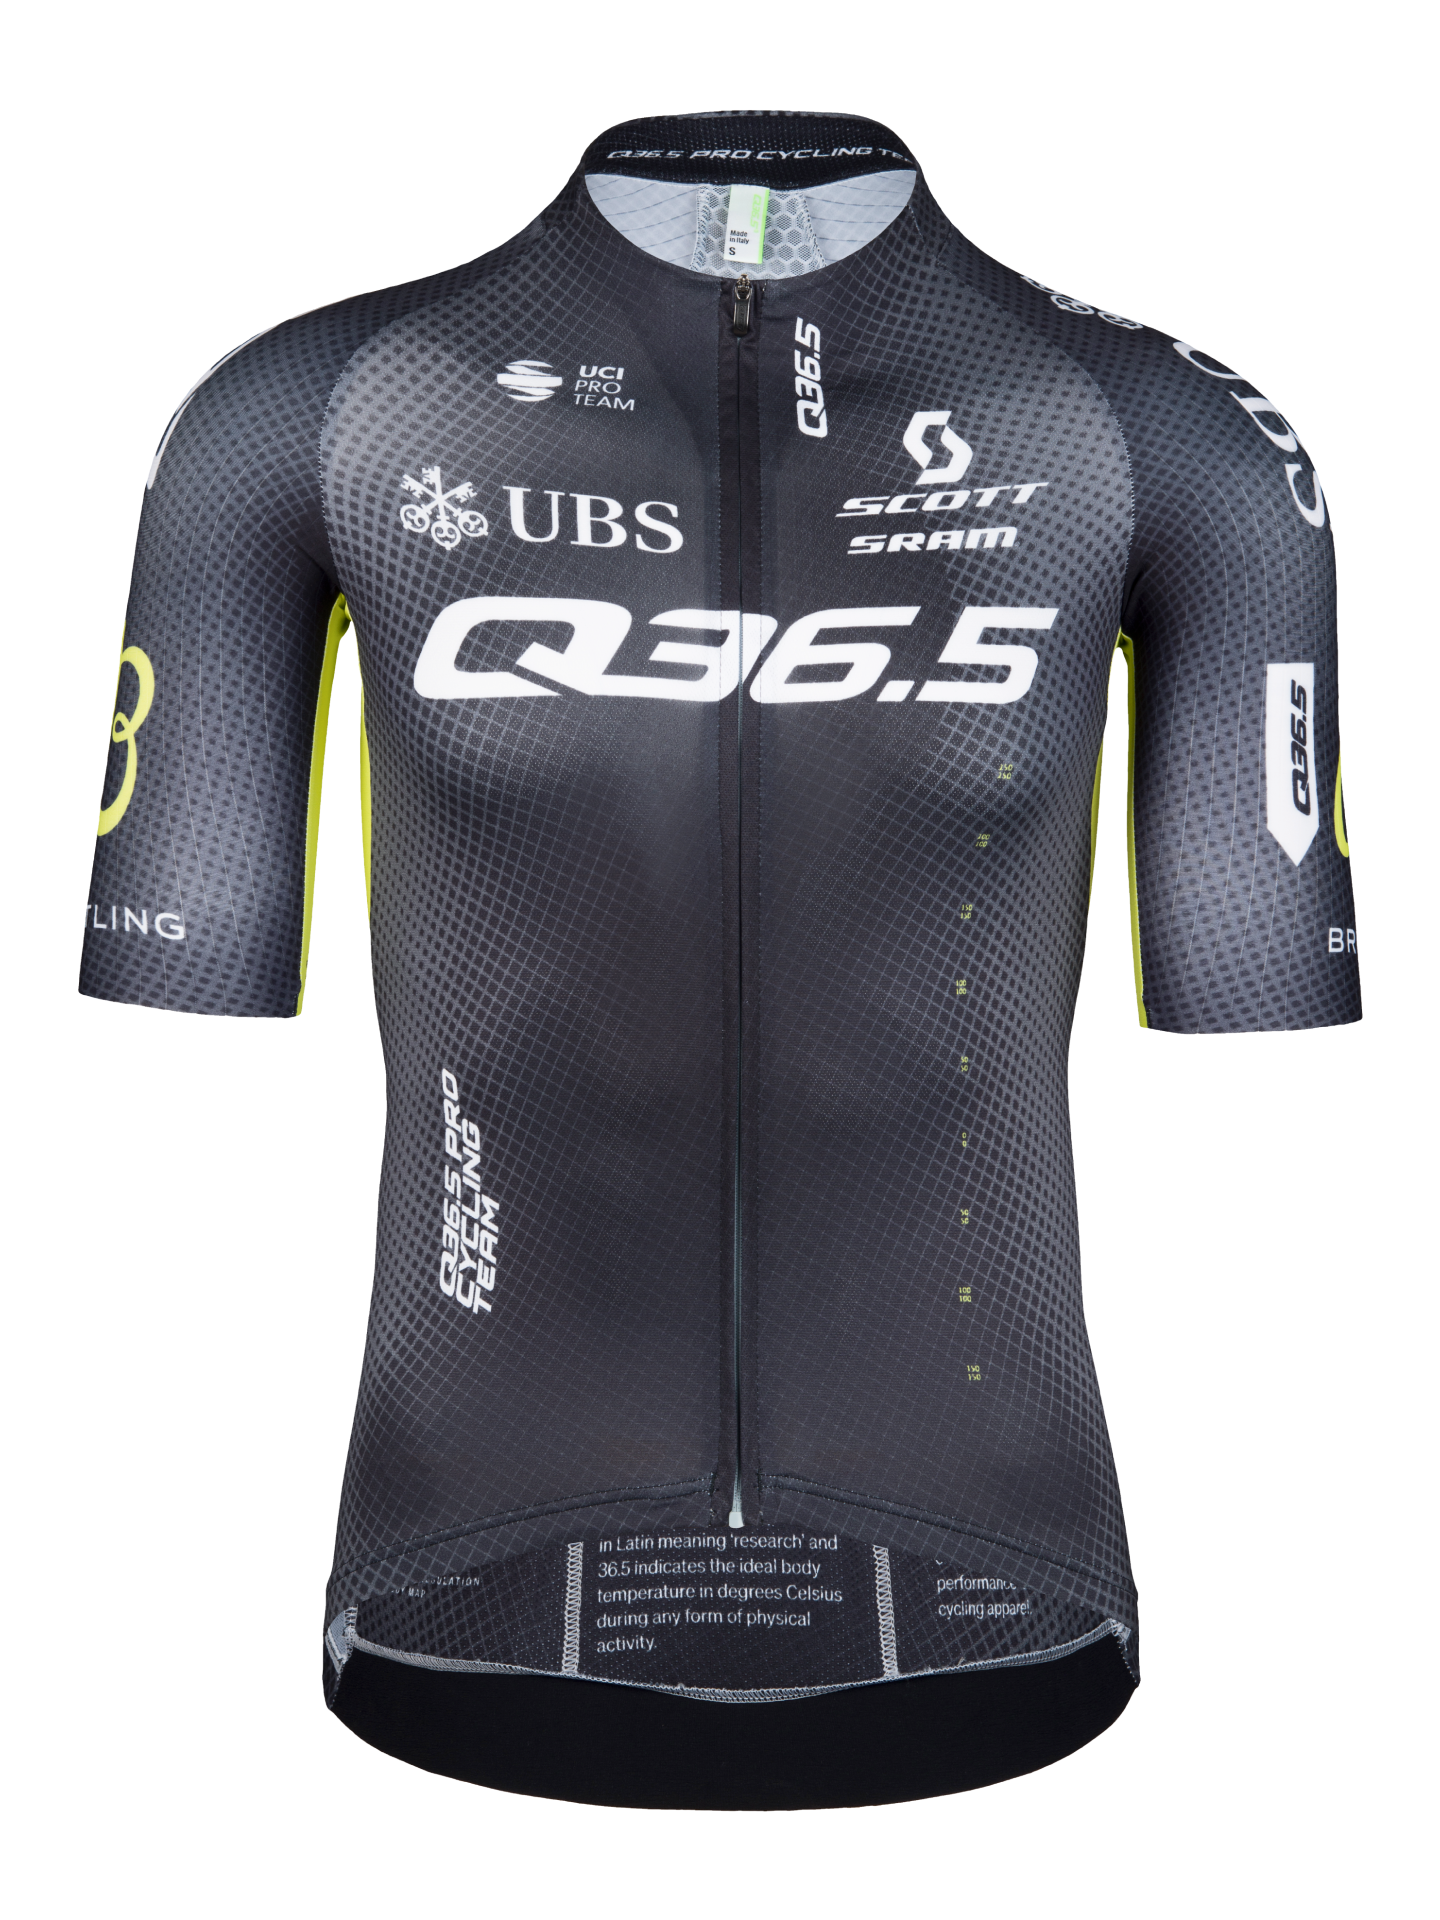 Gregarius Q36.5 Pro Cycling Team Jersey